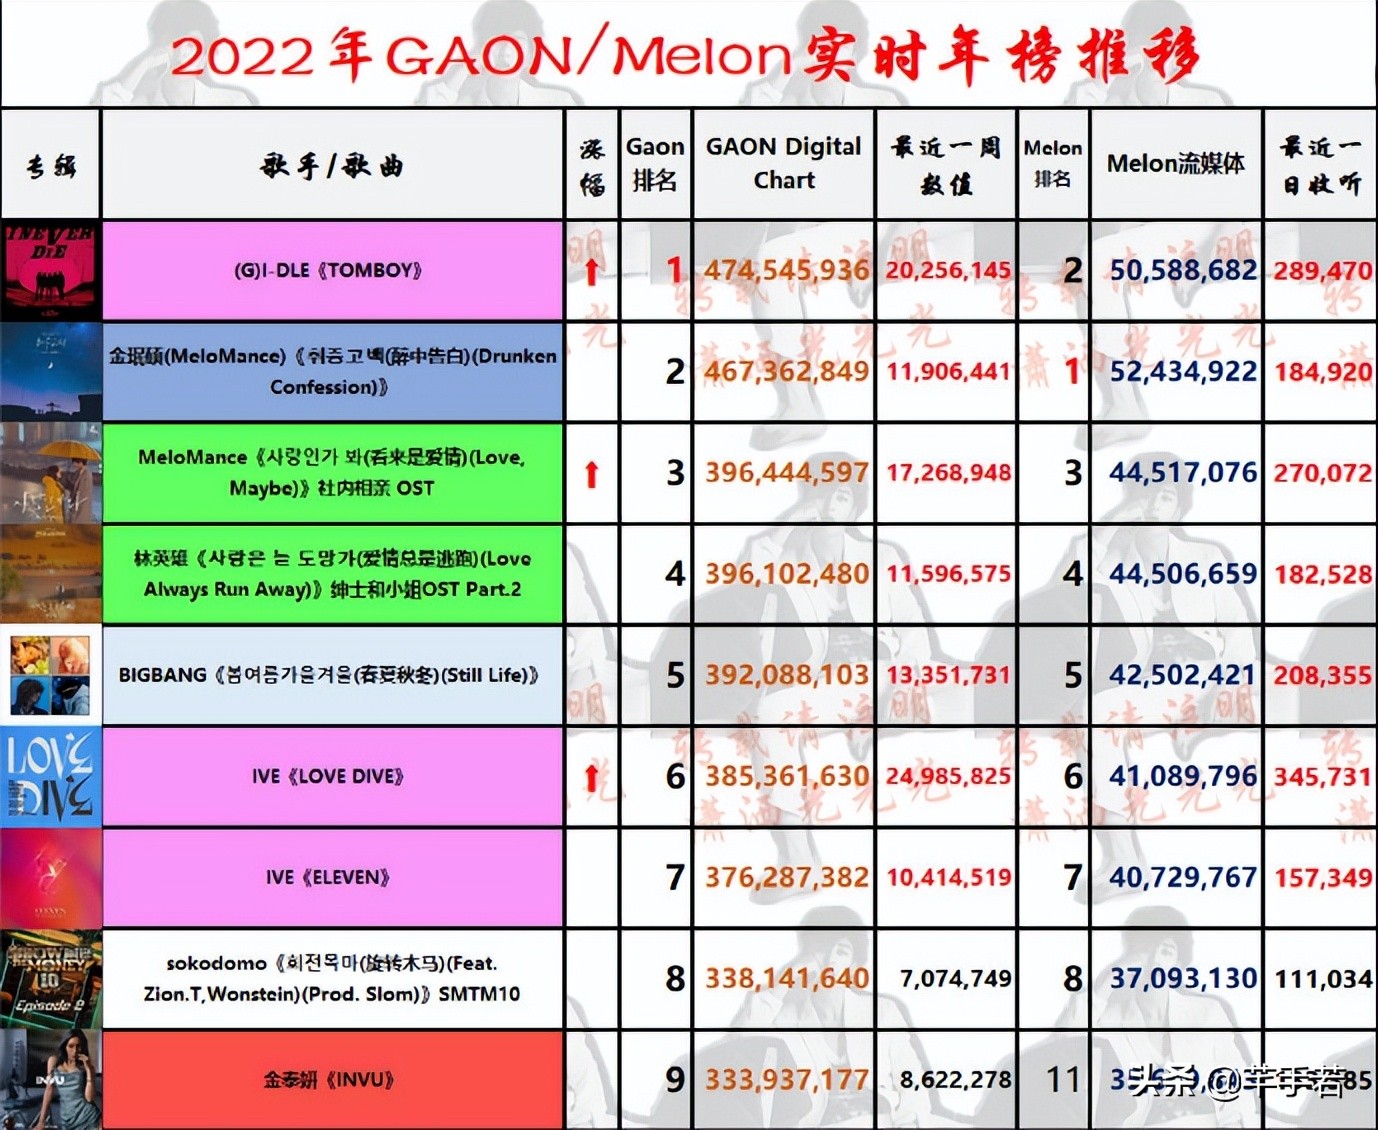 (G)I-DLE的《TOMBOY》登顶Gaon年榜，自作曲女团，用作品证明自己